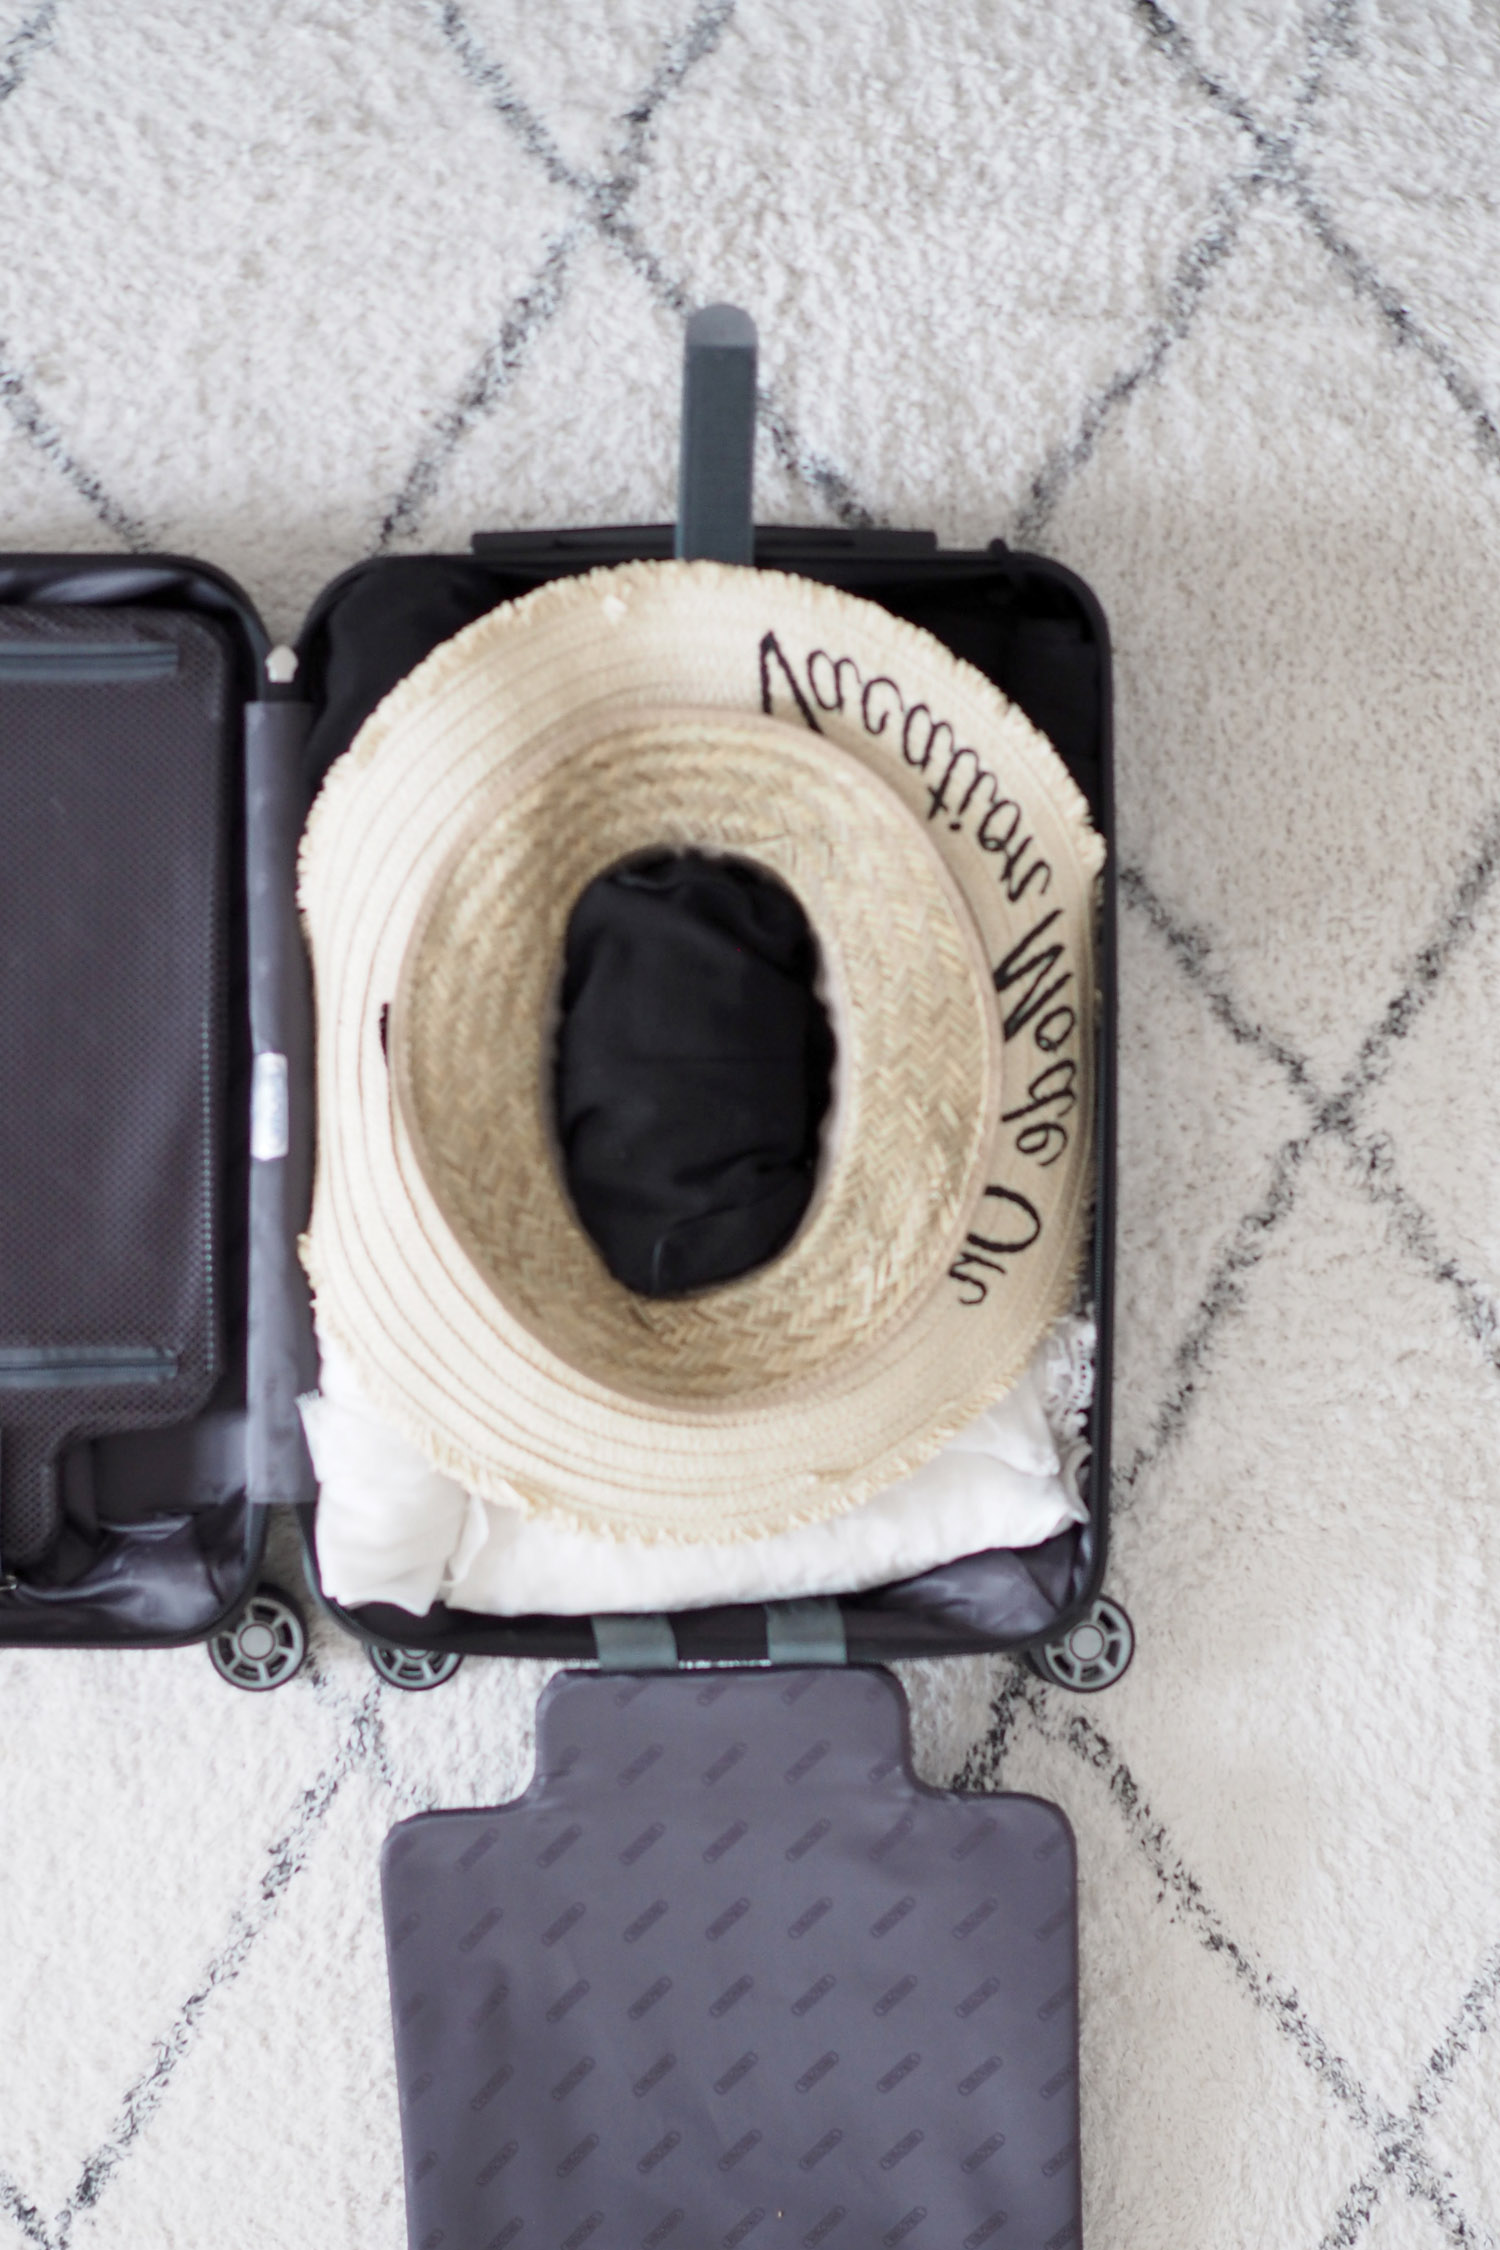 Char and the city, How to pack a sunhat into a suitcase?, Miten pakata aurinkohattu matkalaukkuun?